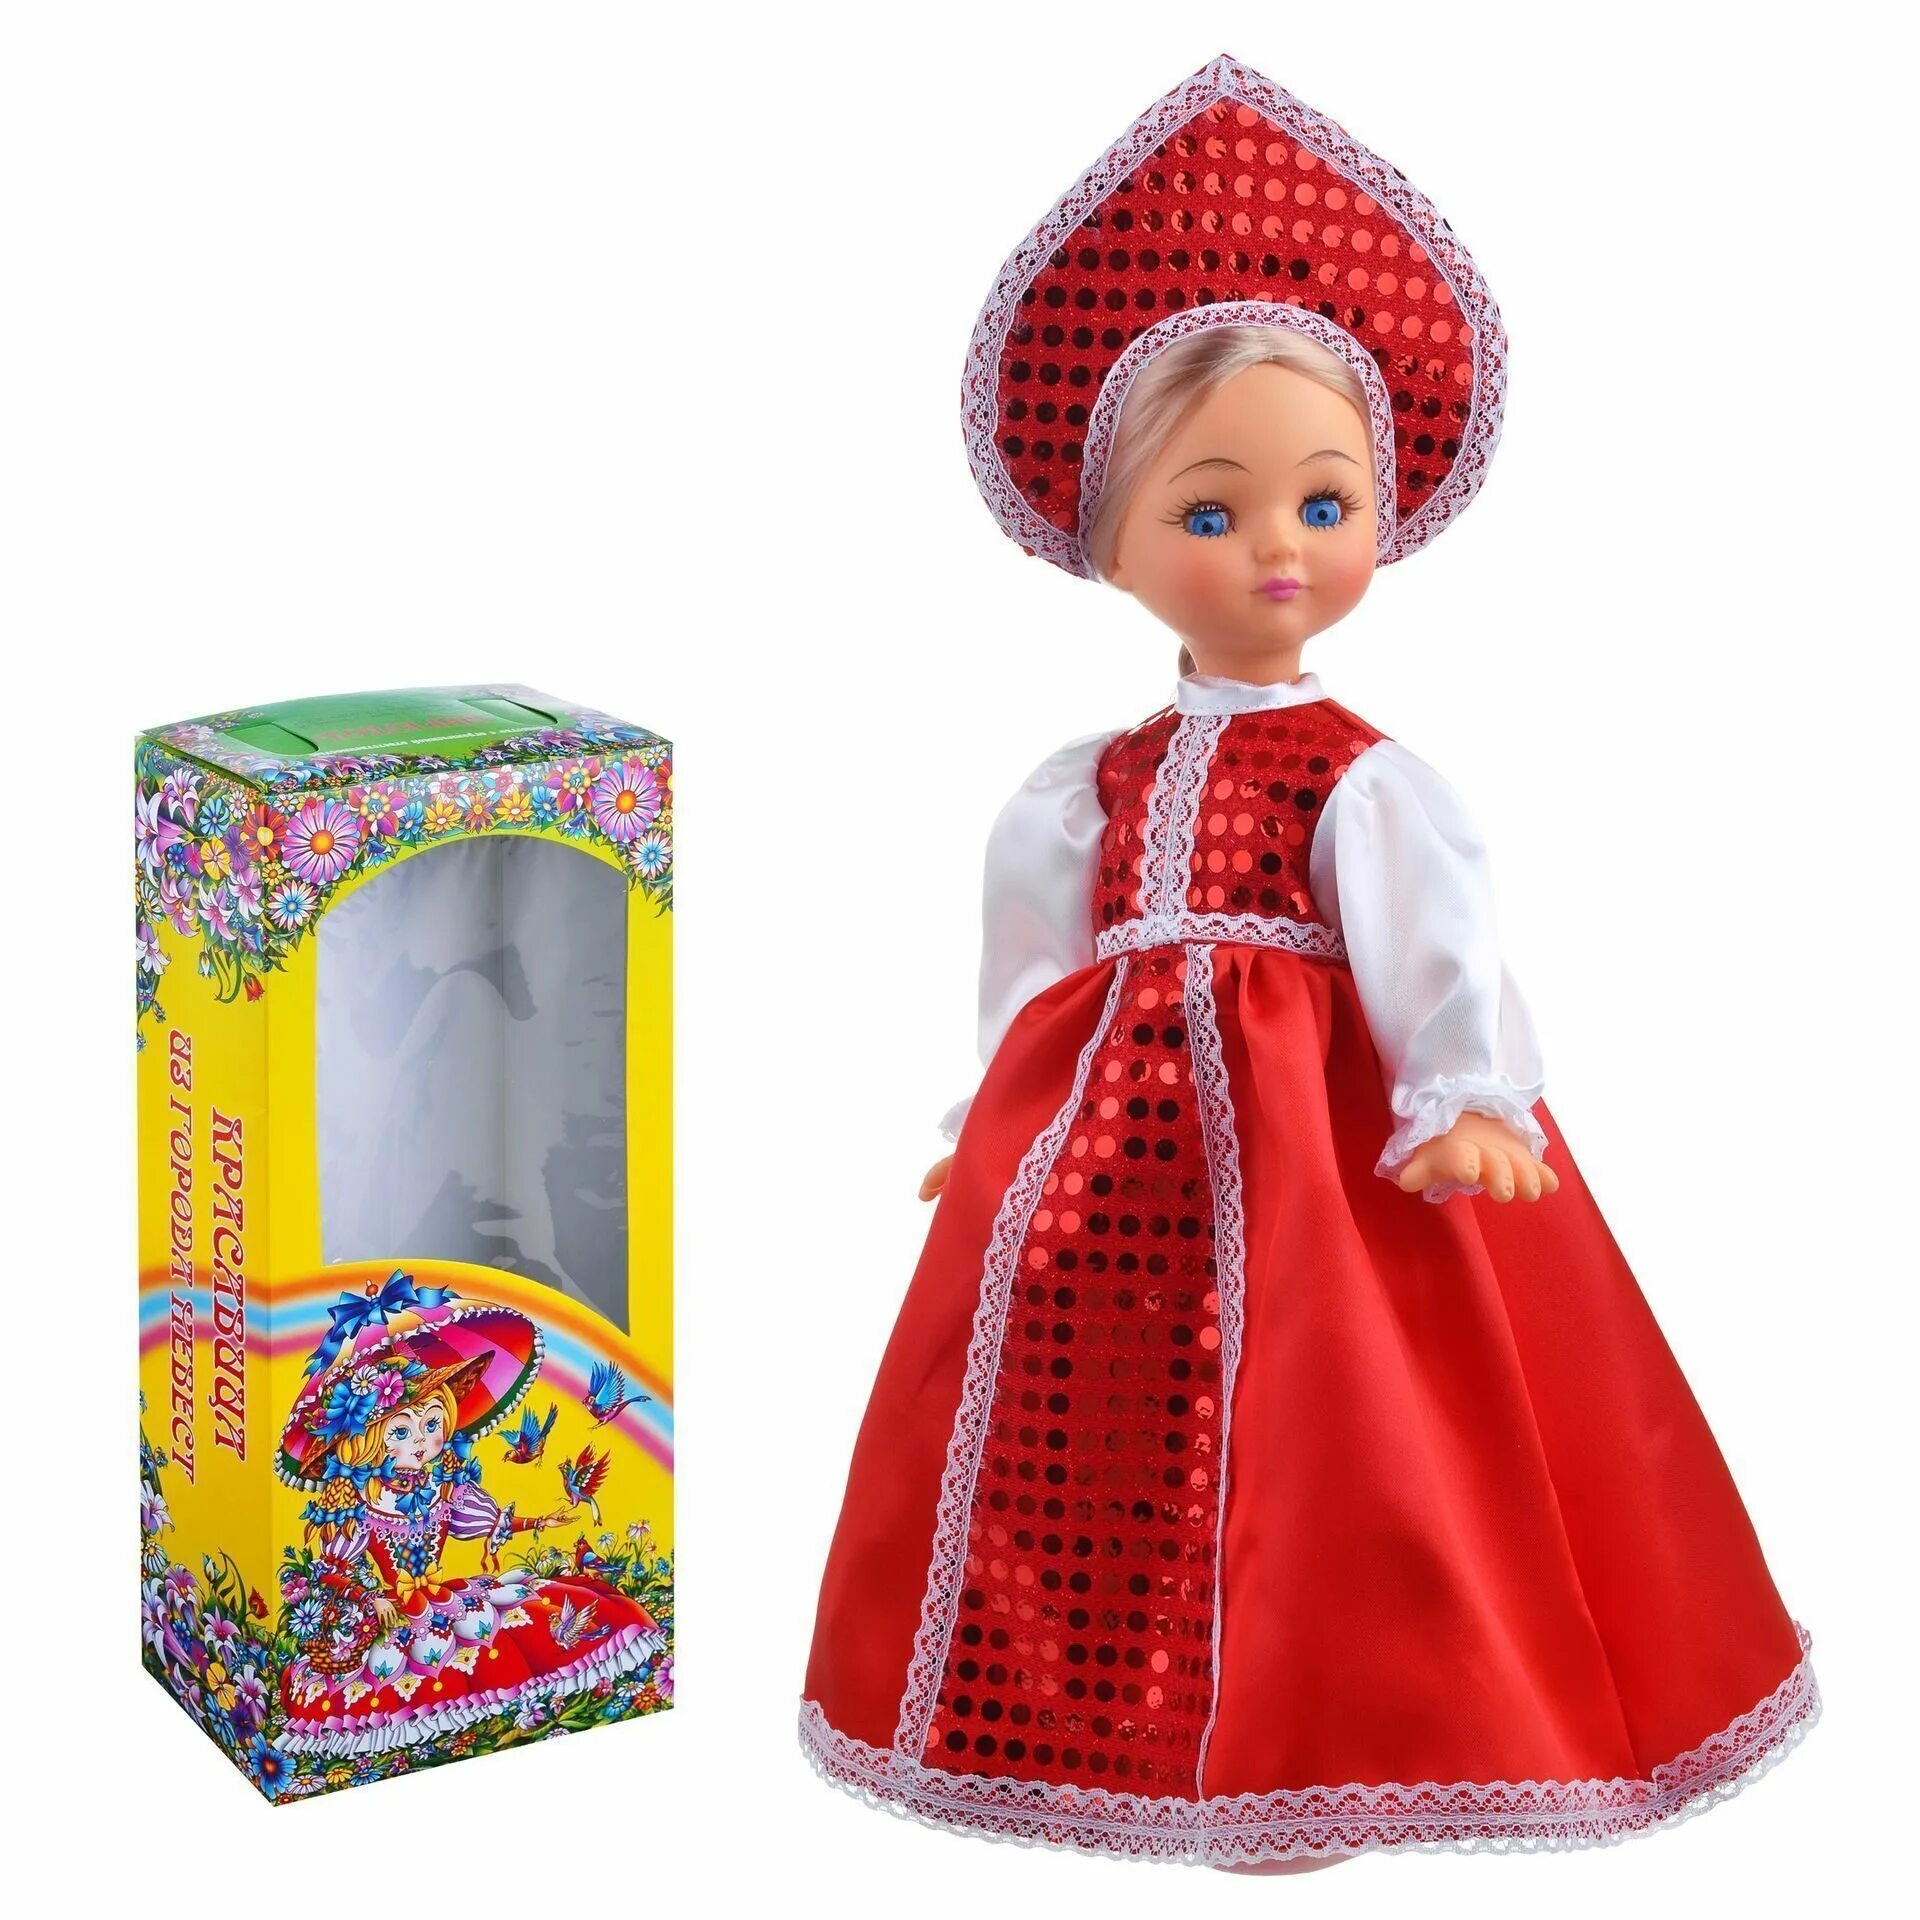 Кукла мир кукол россиянка, 45 см, лен45-16. Кукла «Россияночка», 45 см. Лен45-16 кукла россиянка 45см (коробка). Кукла в русском костюме..